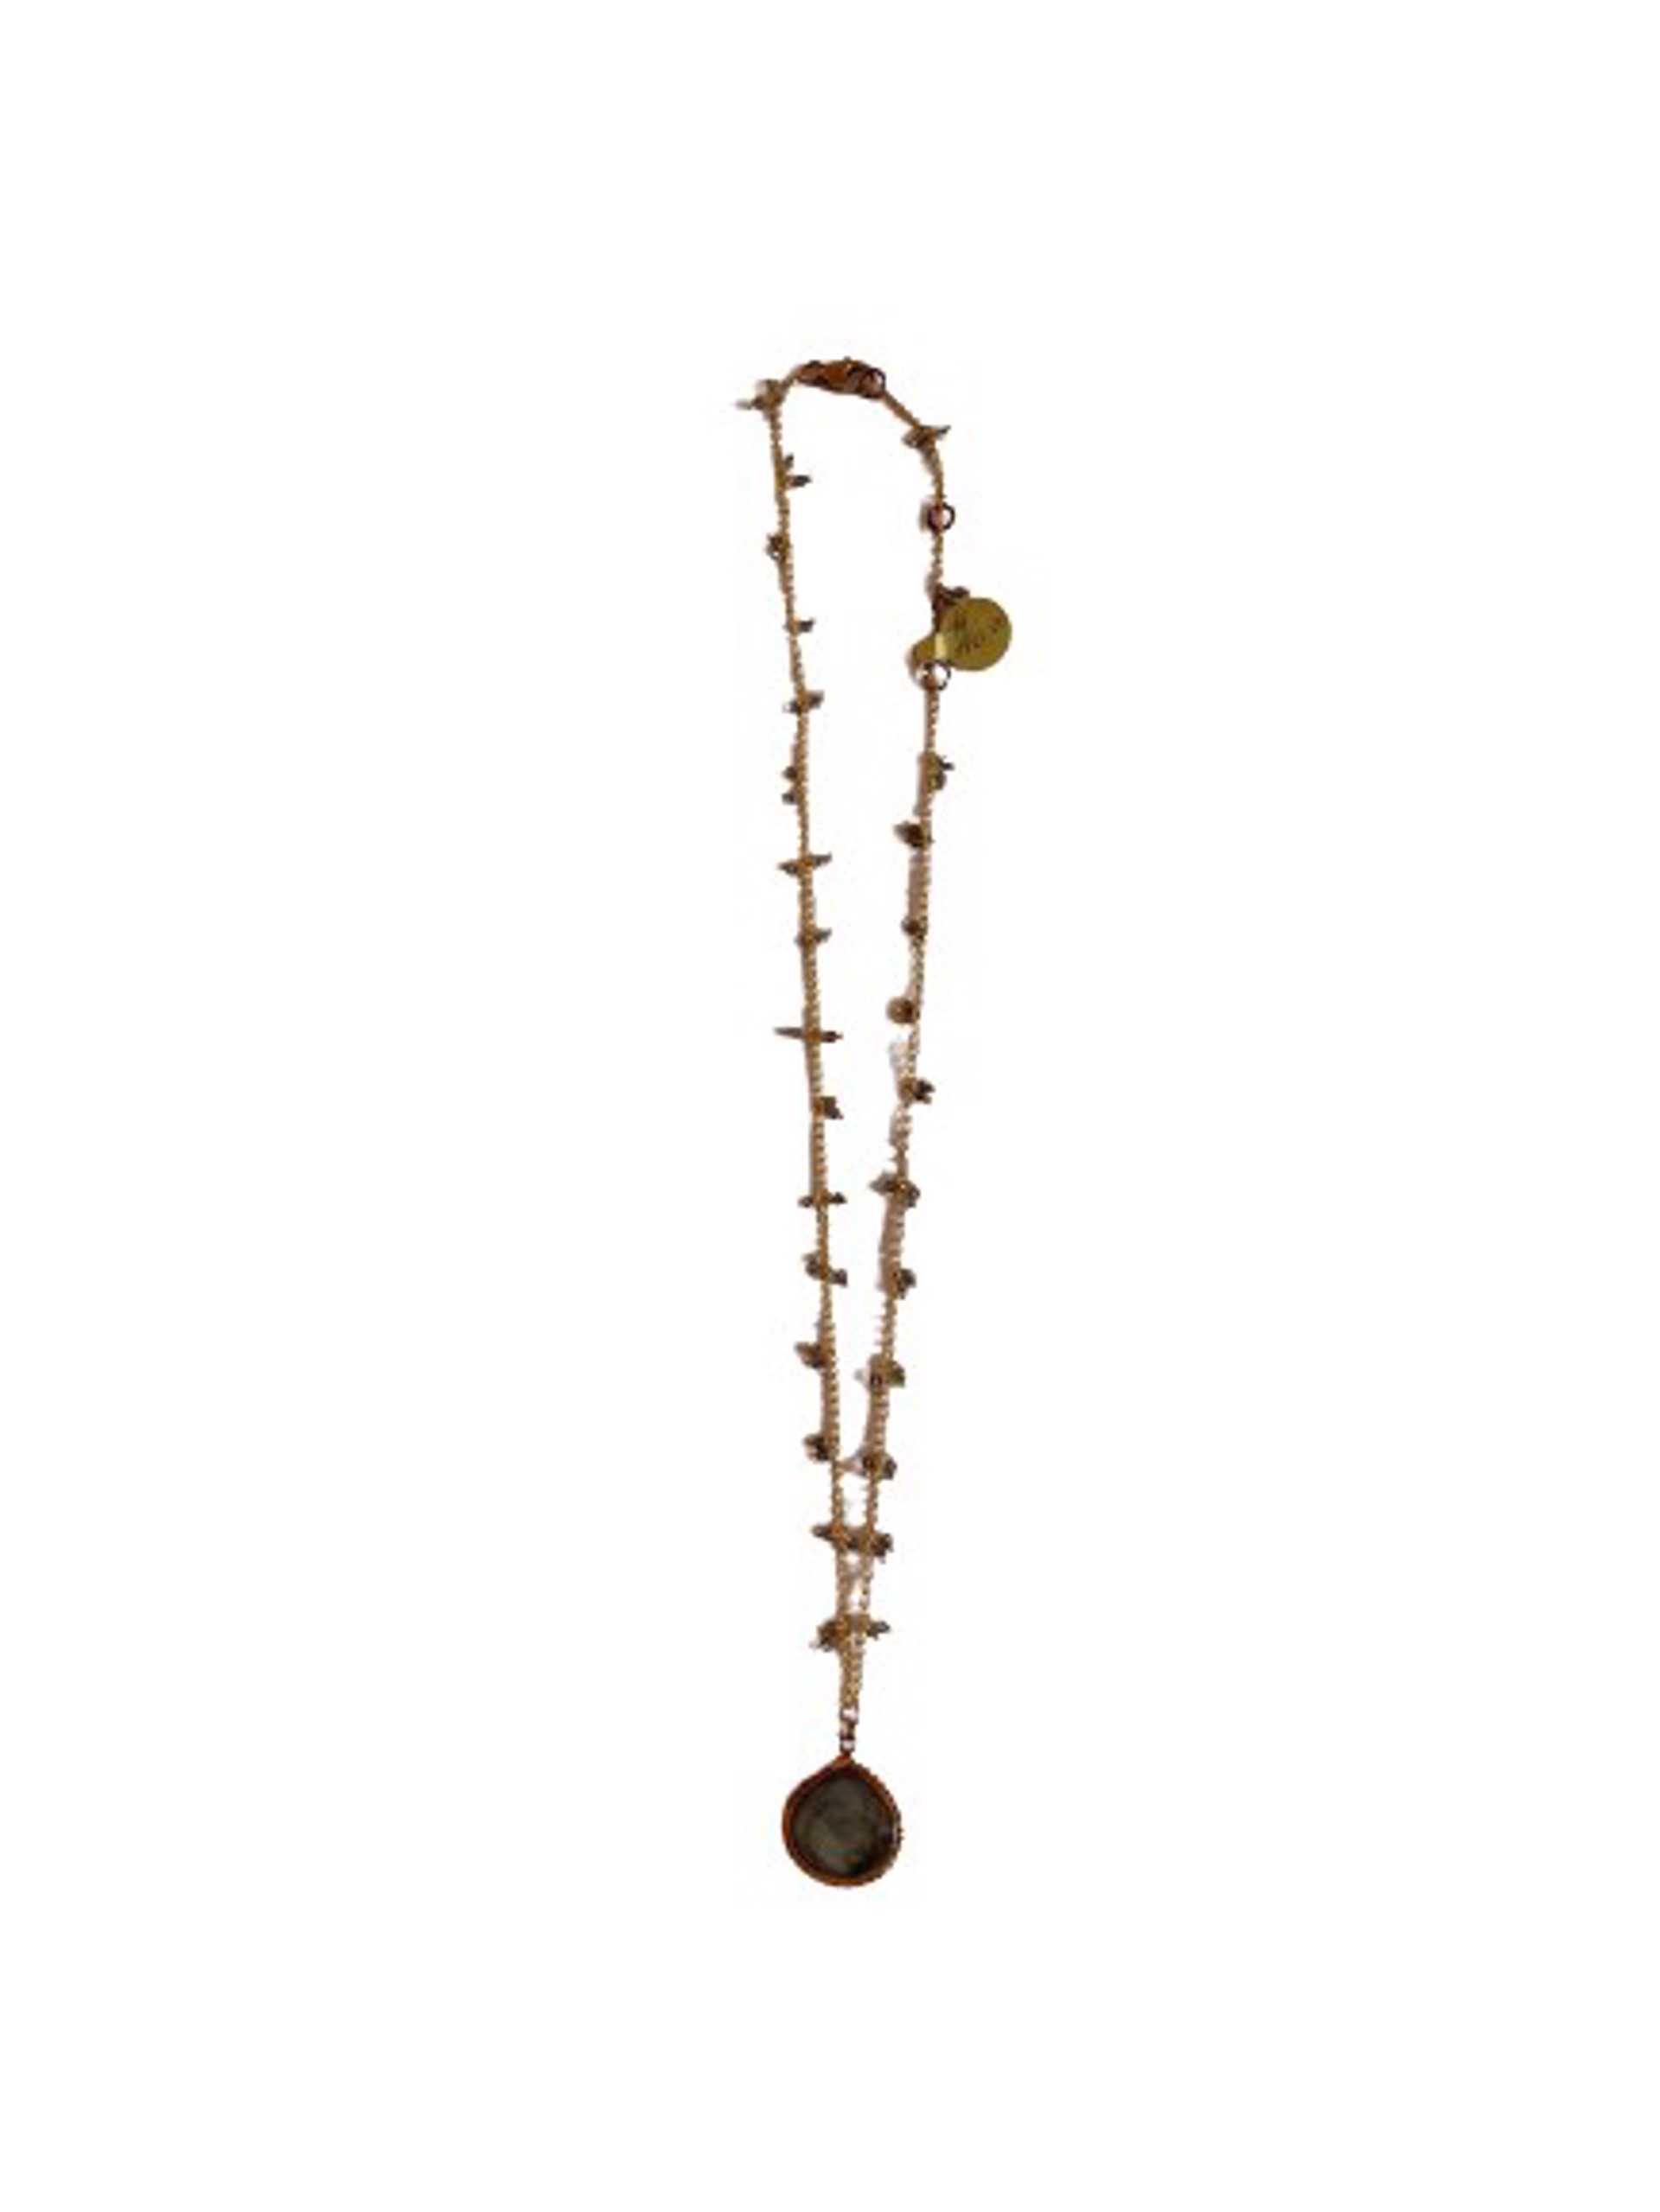 Gold Vermeil and Labradorite Delicate Dangle Chain Necklace with a Teardrop Shaped Labradorite Pendant by Karen Birchmier